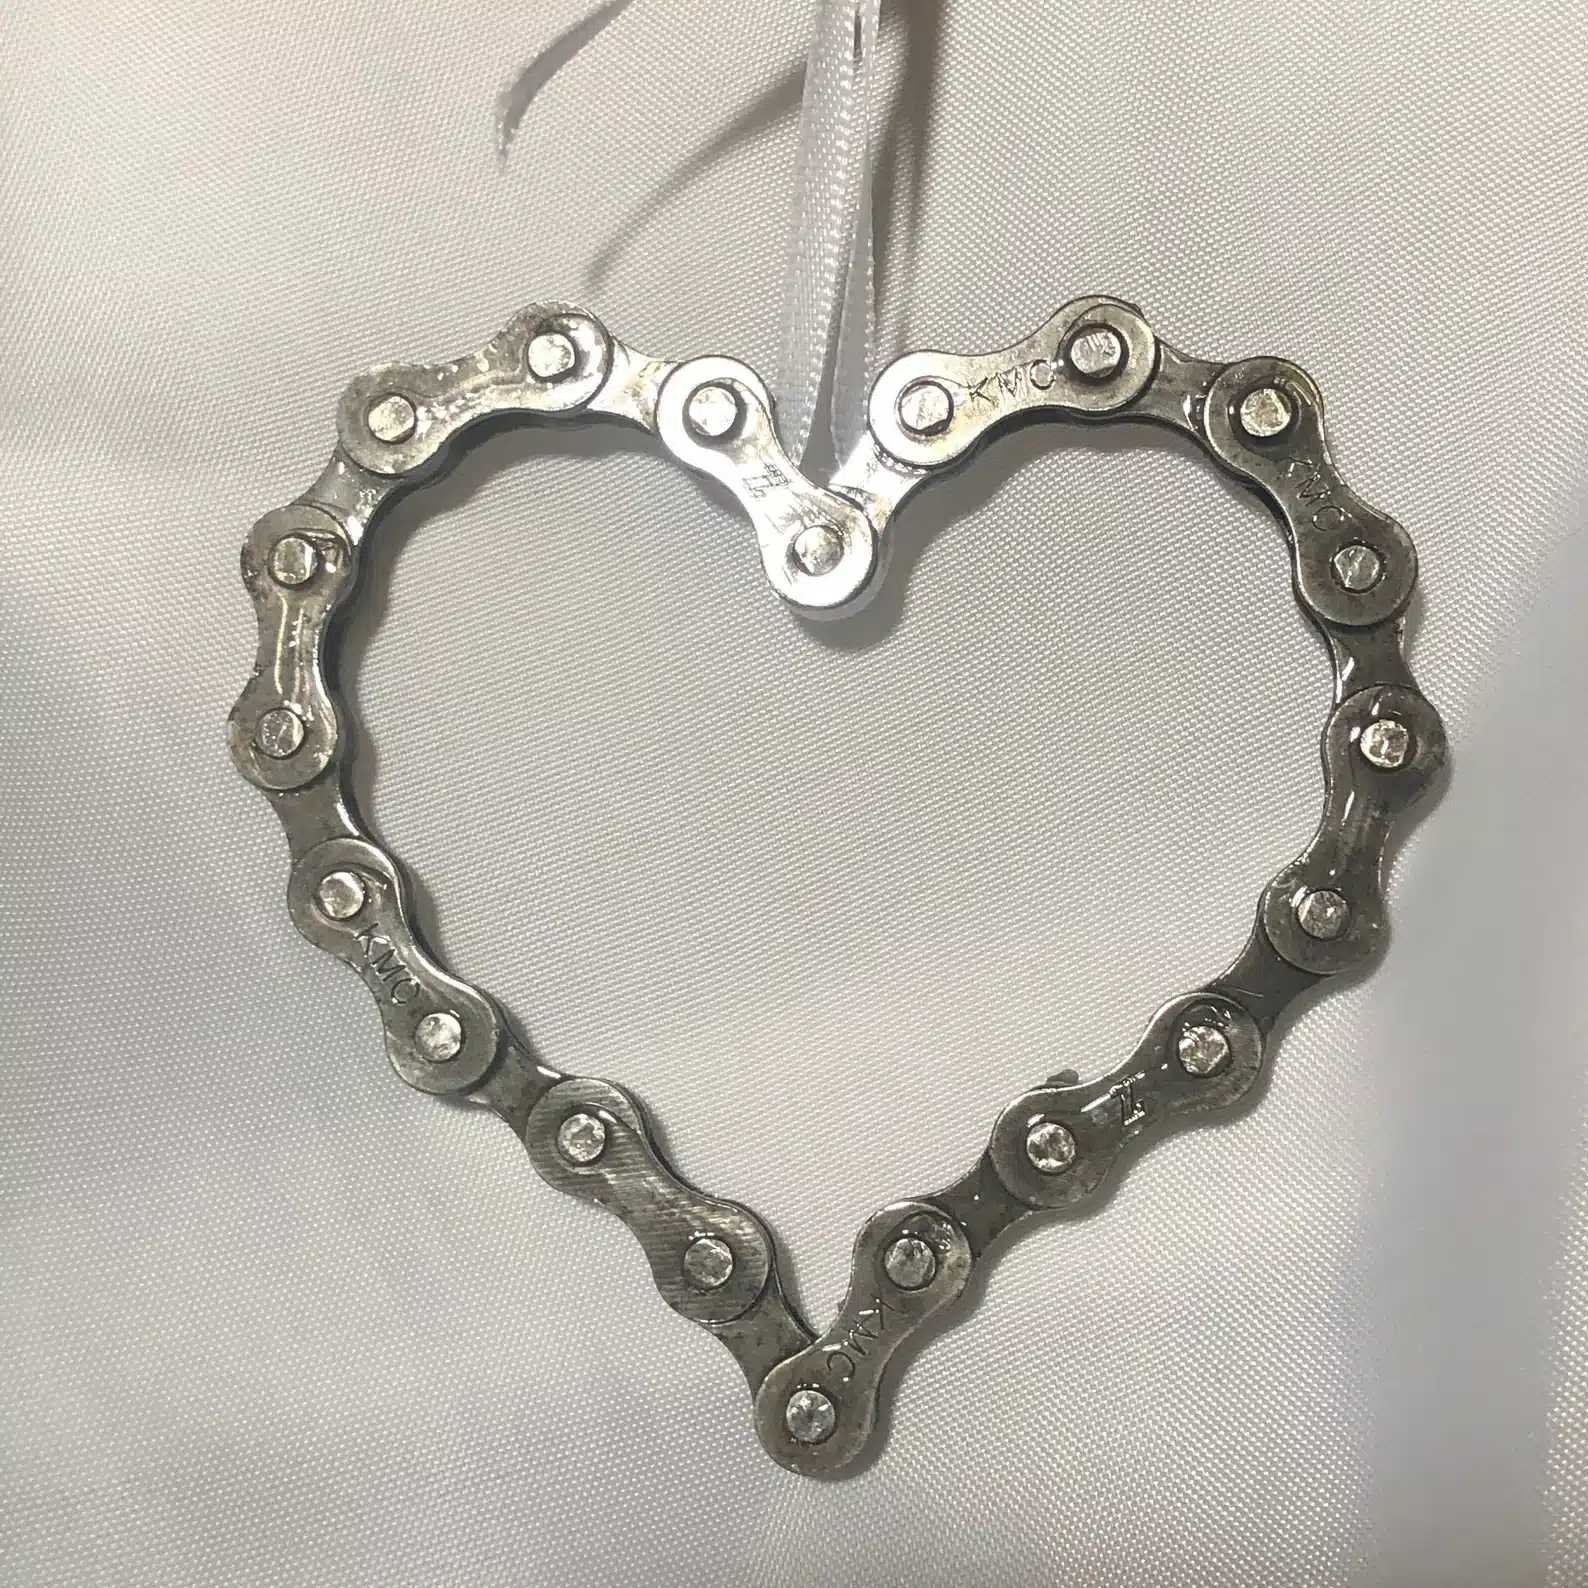 Upcycled Bike Chain Heart Ornament